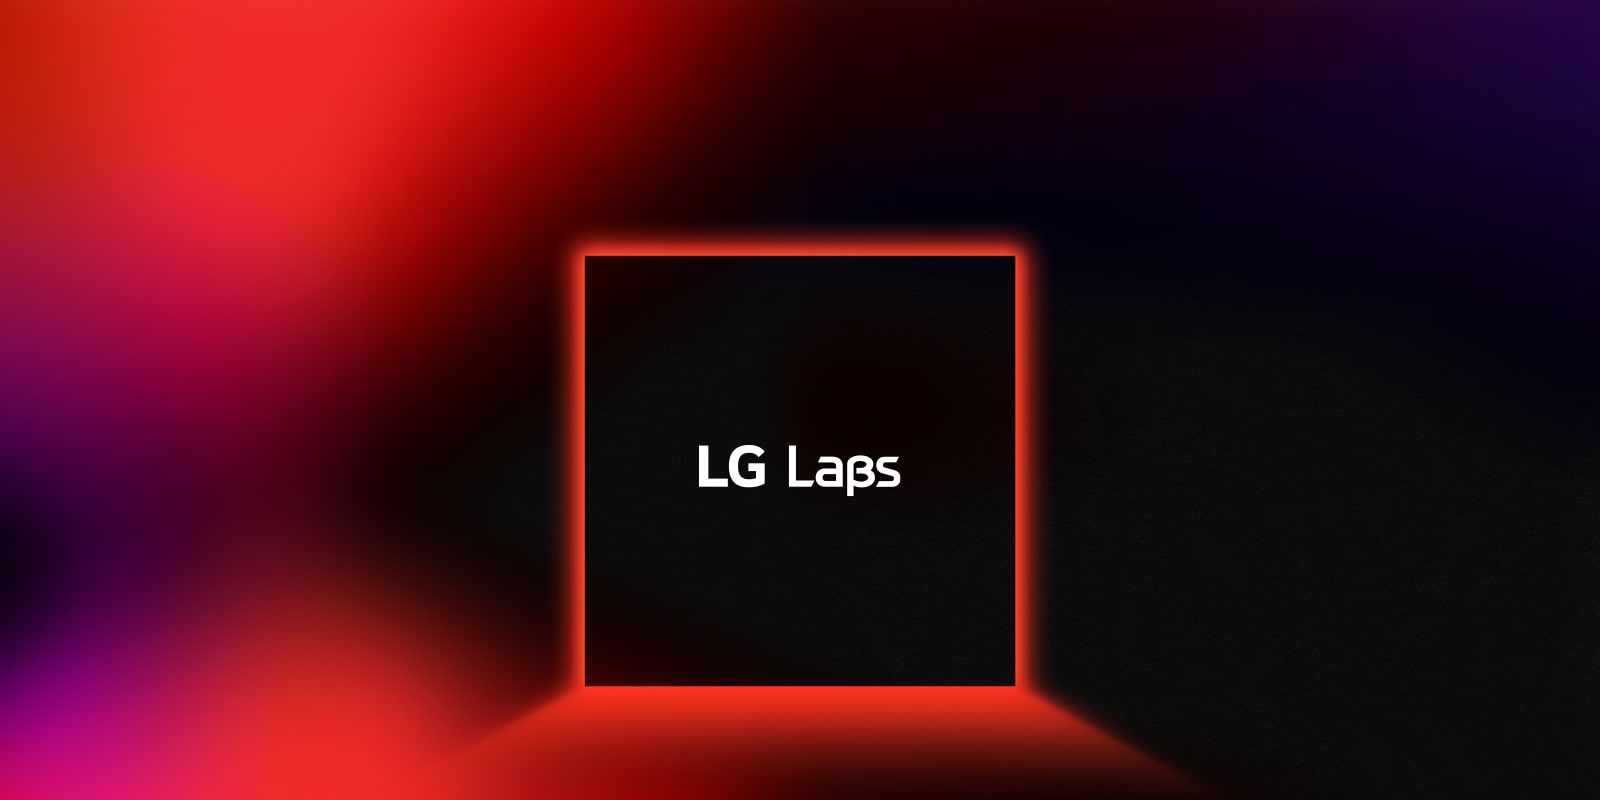 An image of LG LABS symbol.